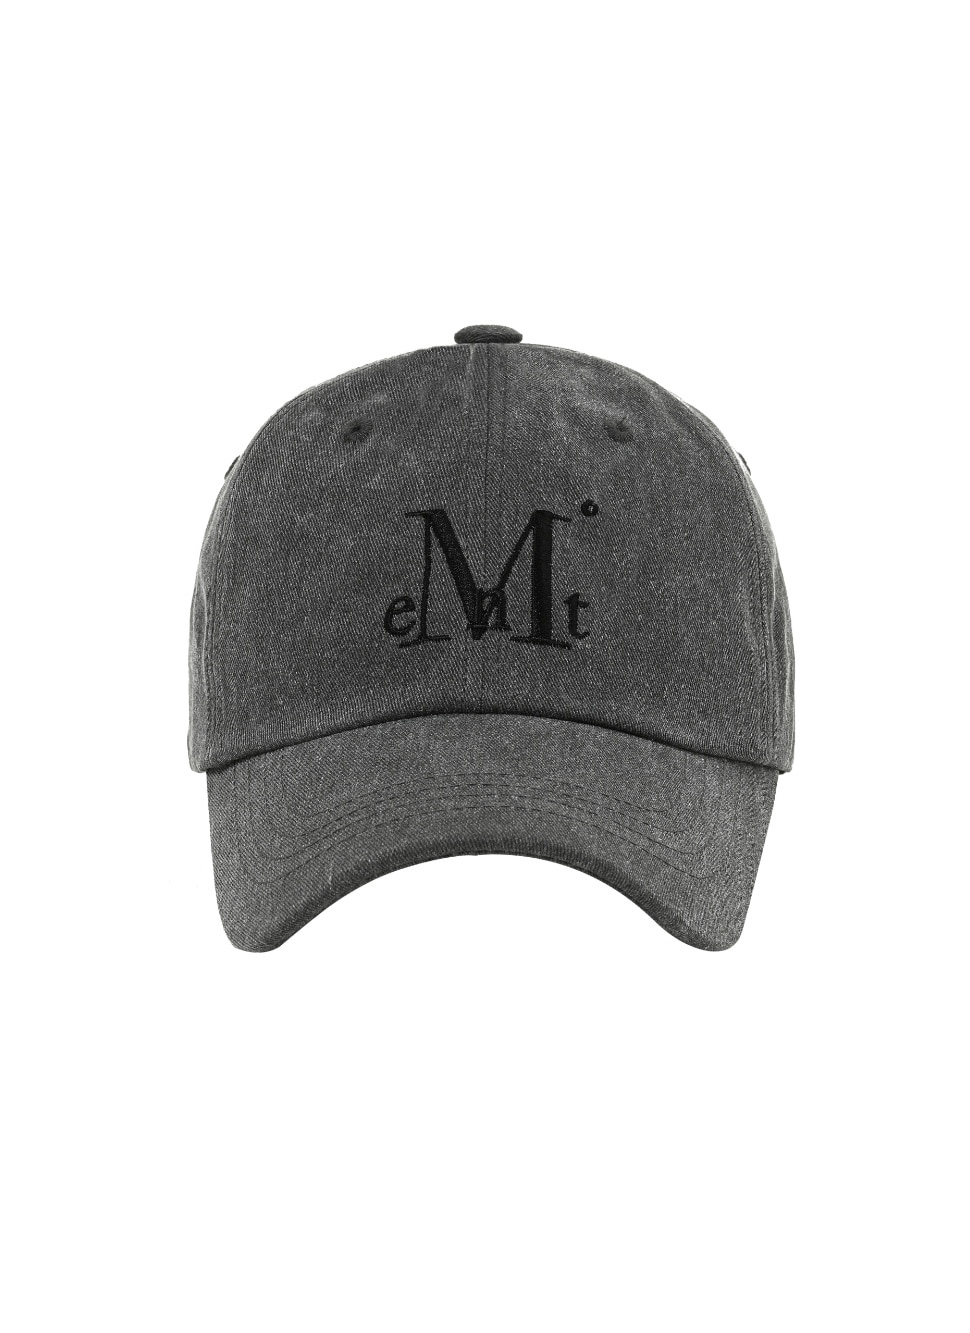 MUCENT BALL CAP - 무센트 볼캡 (Dyeing gray)